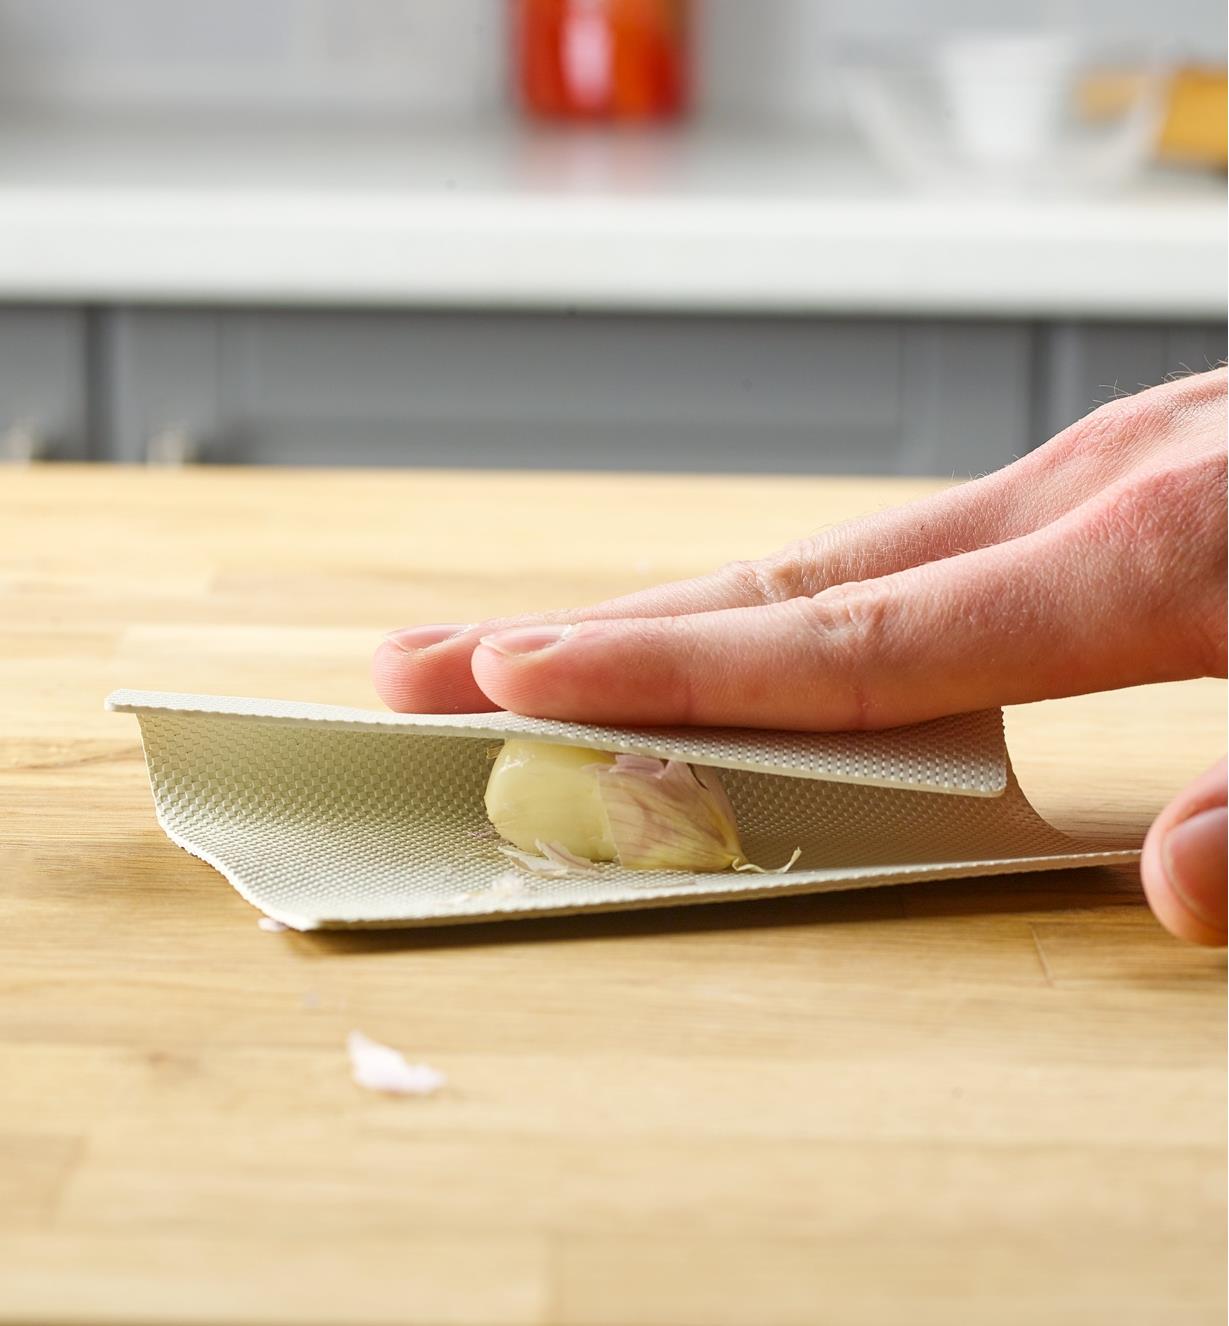 Peeling a garlic clove on a countertop using the garlic peeling mat